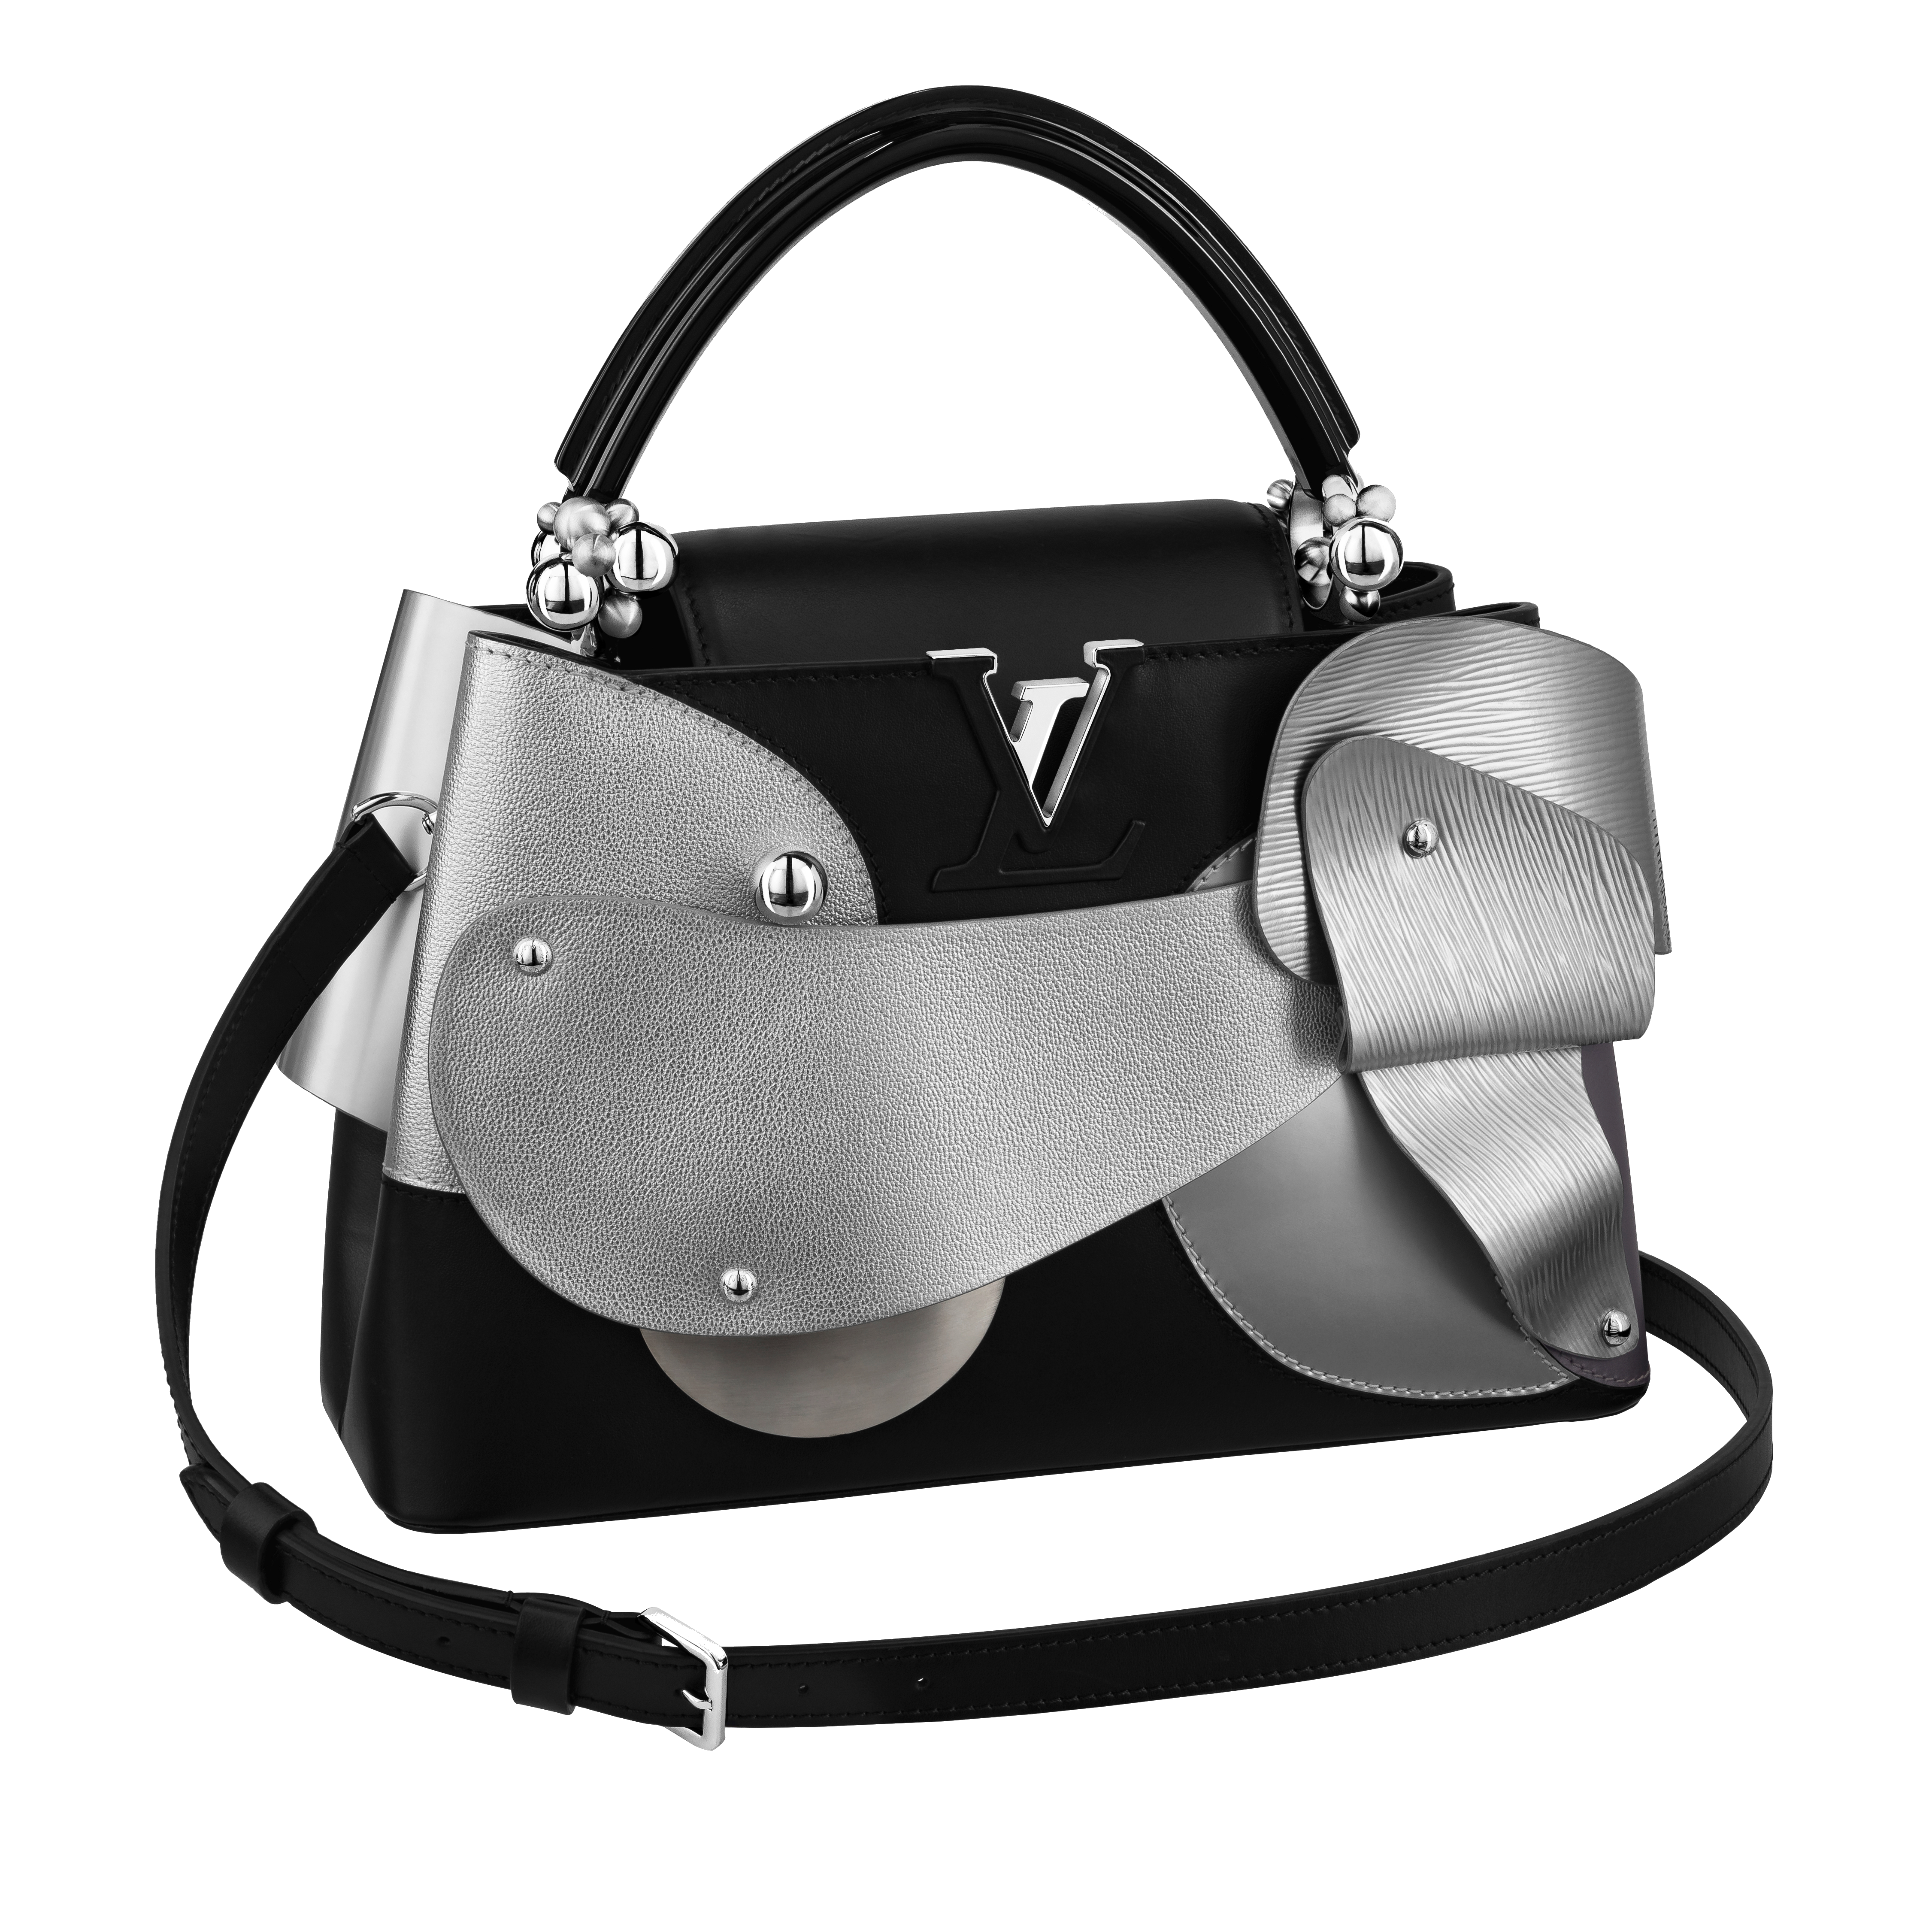 US artist Josh Smith has put his name on a Louis Vuitton handbag